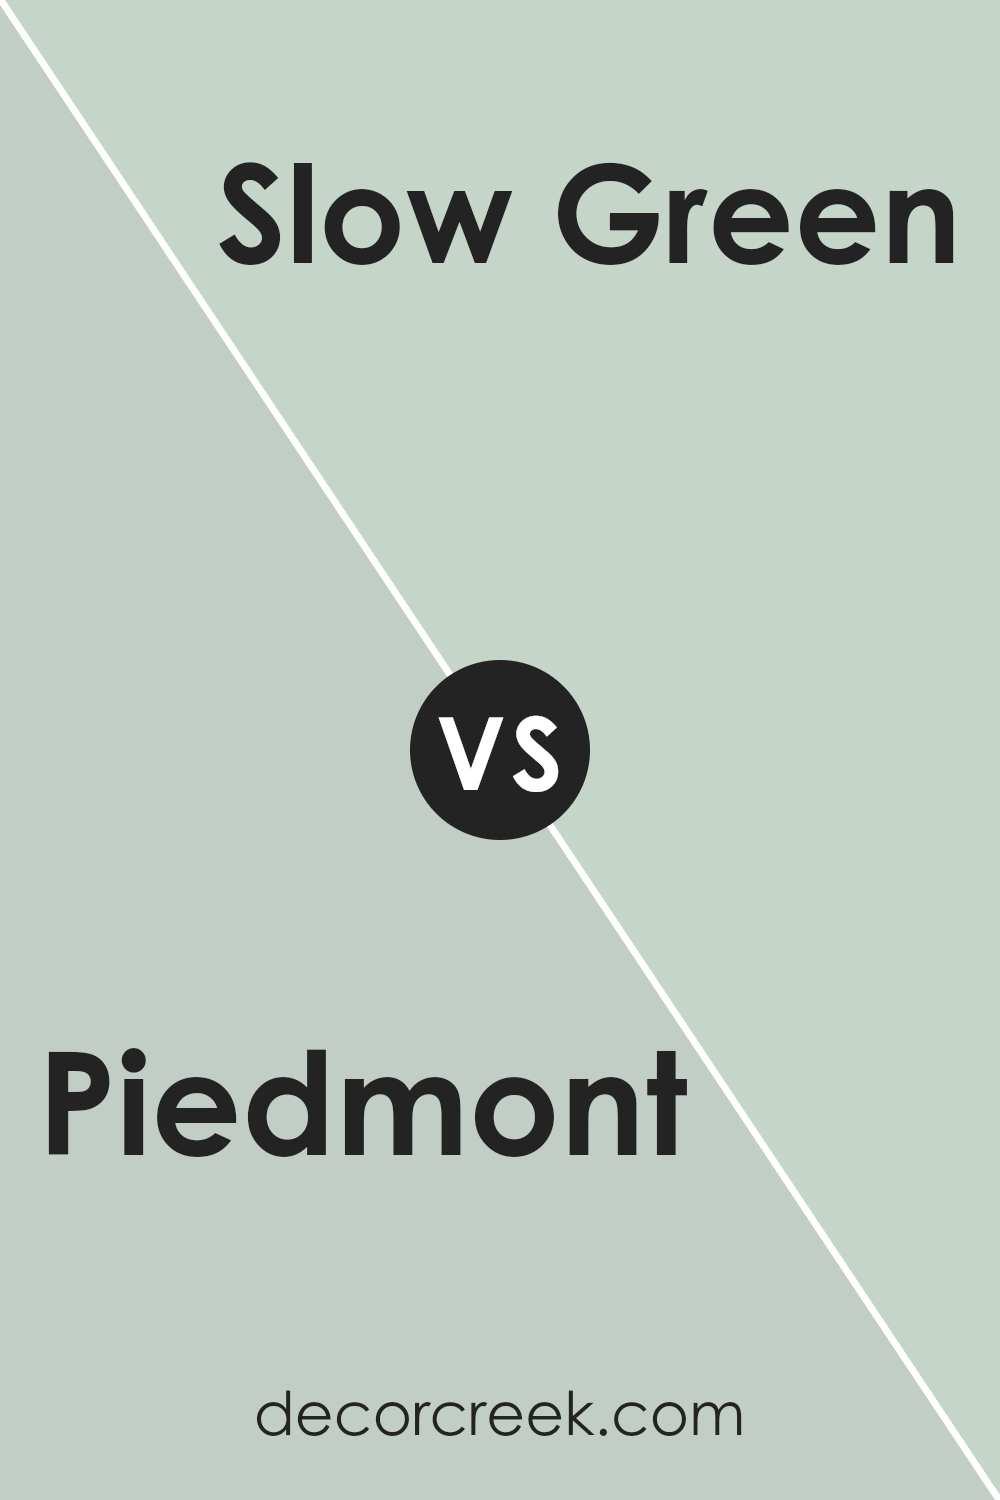 piedmont_sw_9657_vs_slow_green_sw_6456